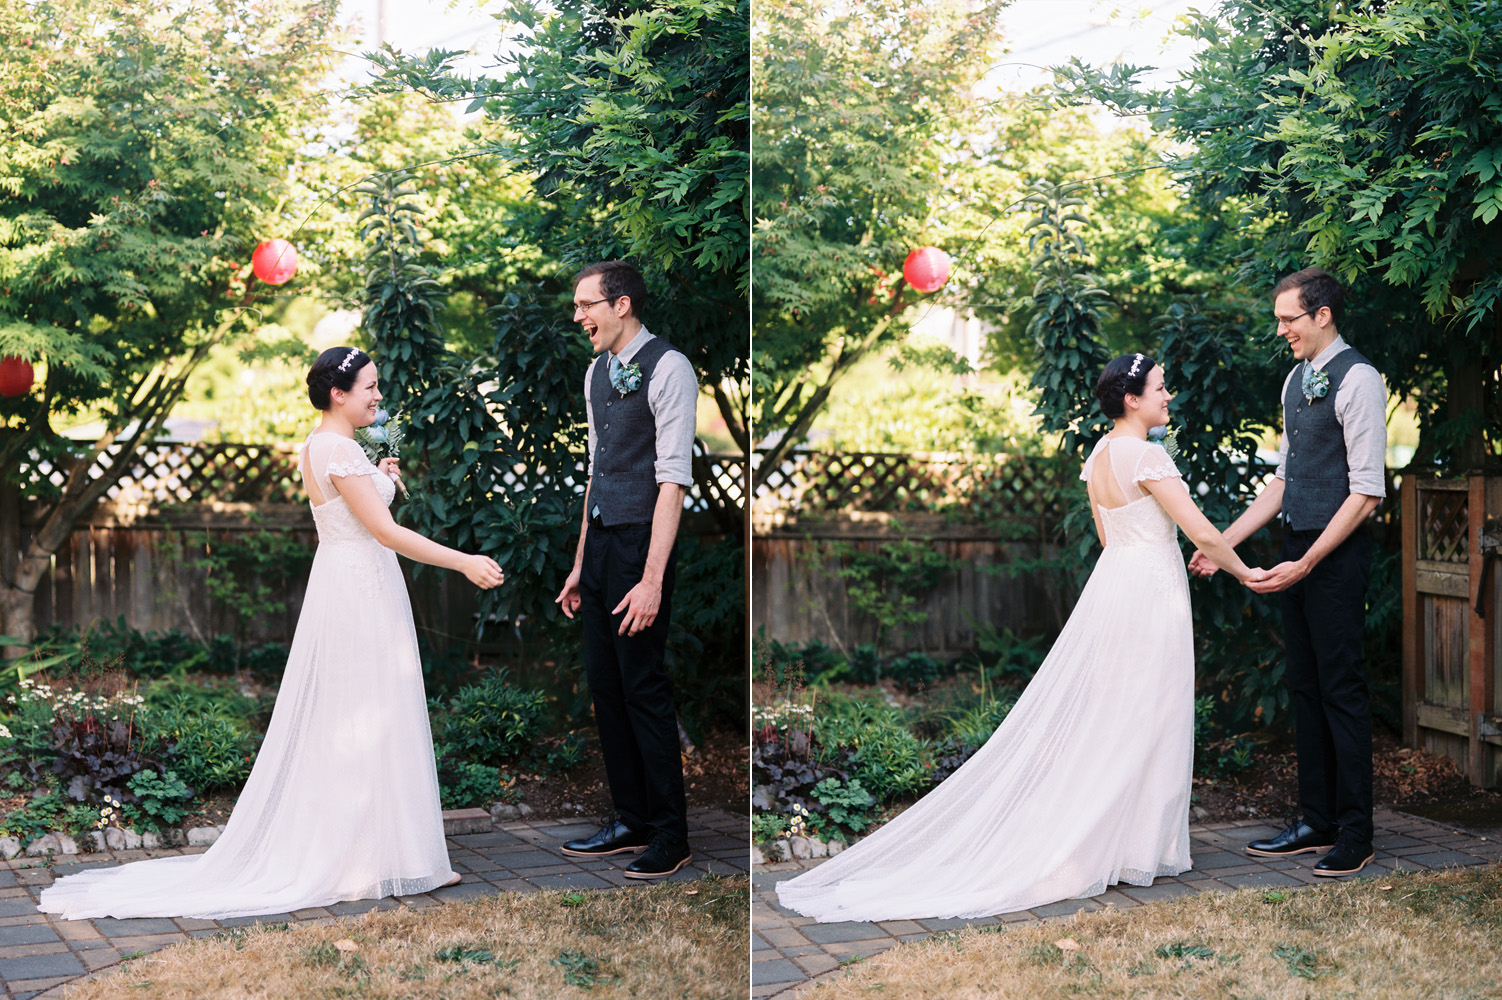 Intimate backyard wedding first look in Seattle